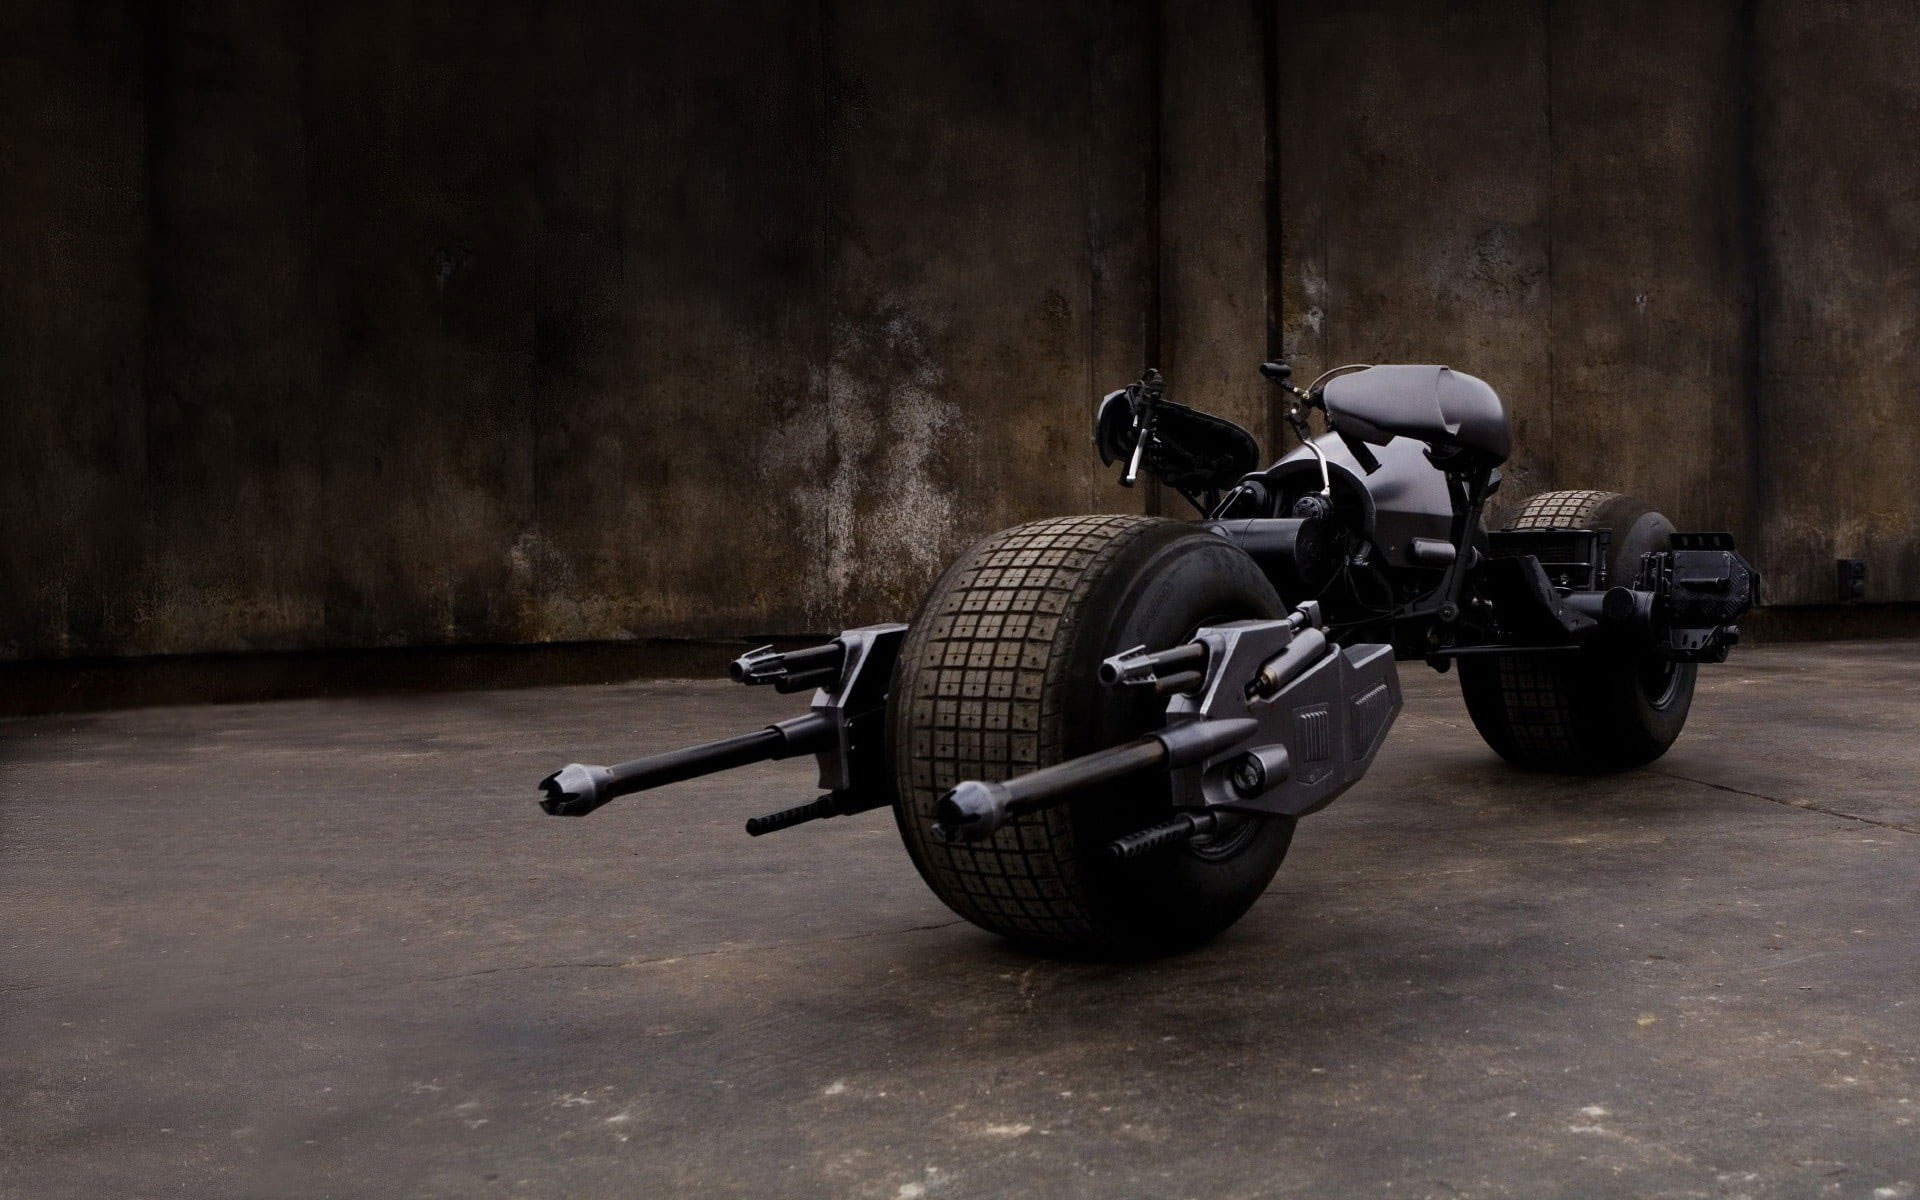 Batman's Bat bike wallpaper, motorcycle, Batpod, The Dark Knight, transportation